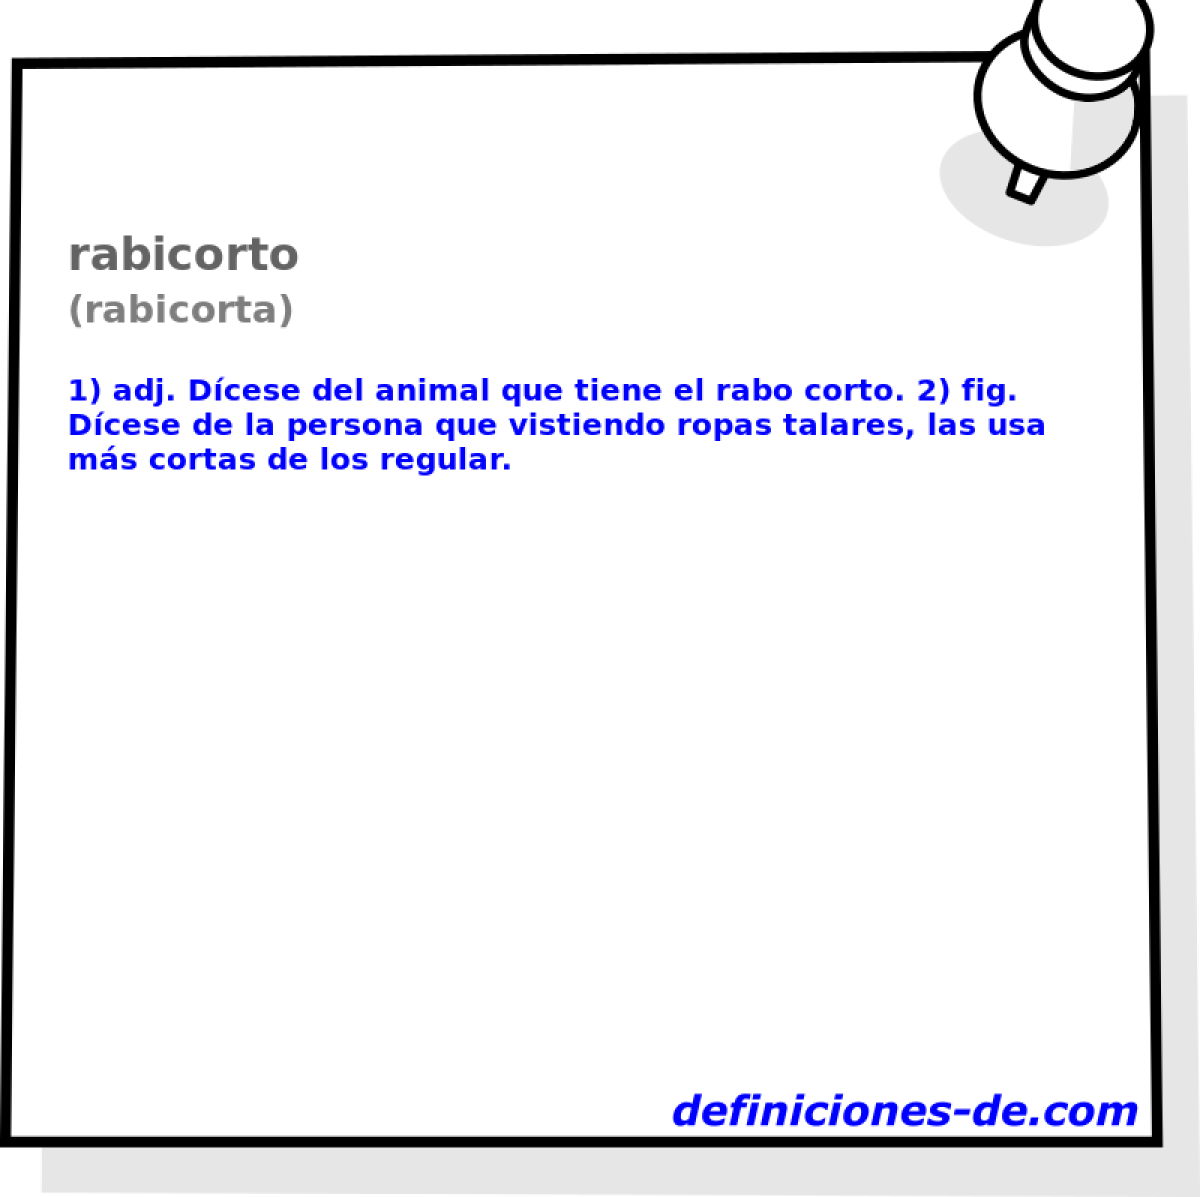 rabicorto (rabicorta)